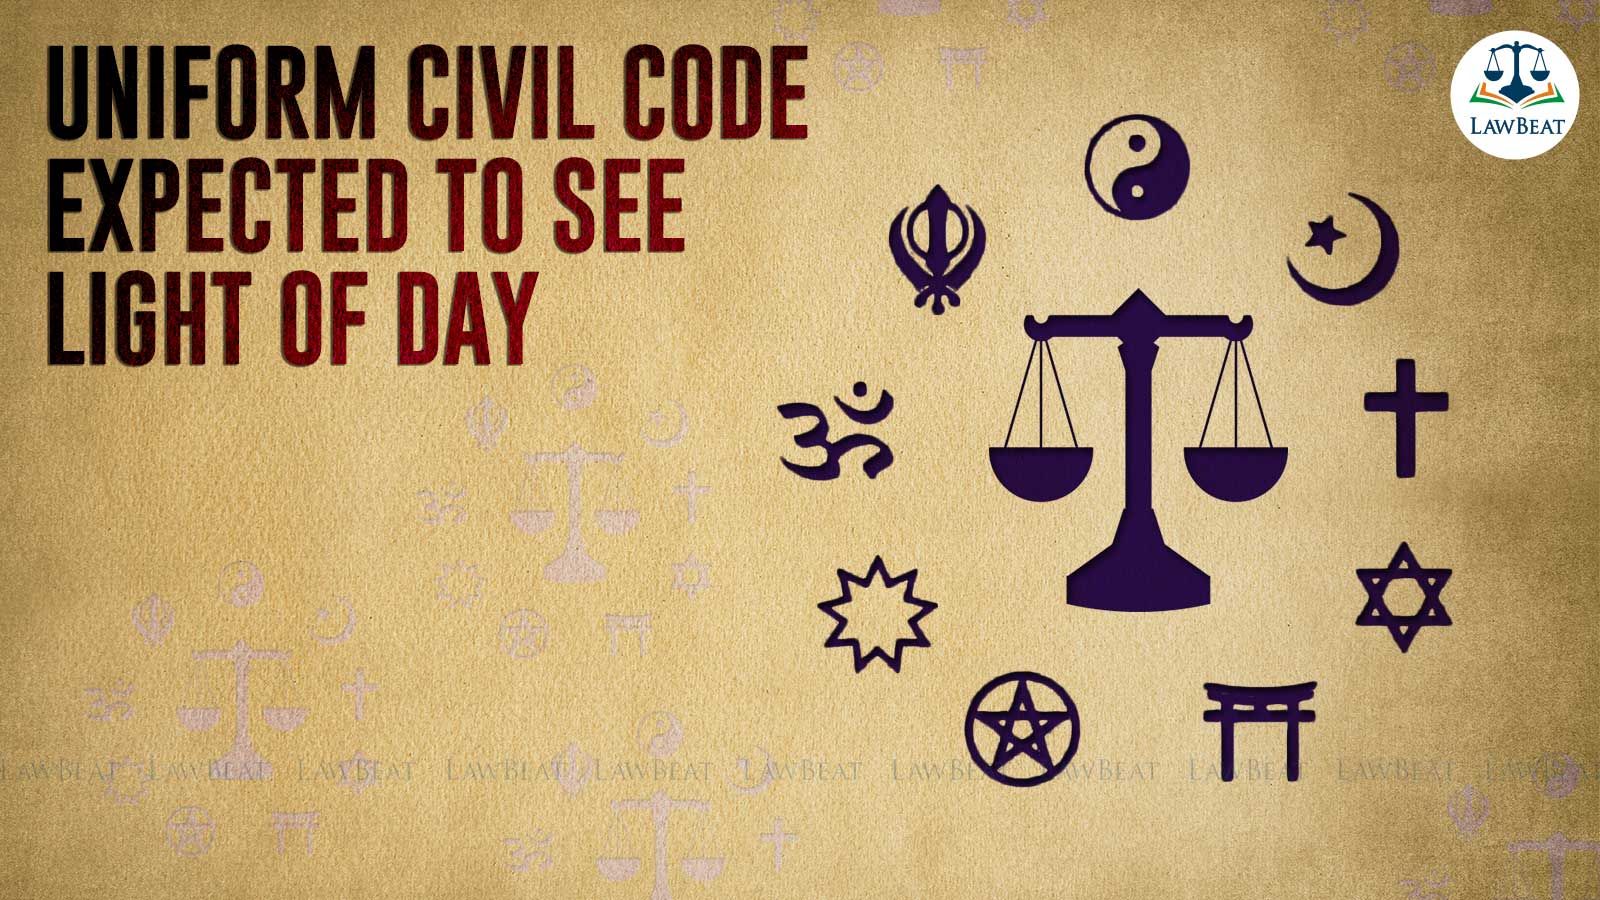 LawBeat Centre to introduce Uniform Civil Code Bill in